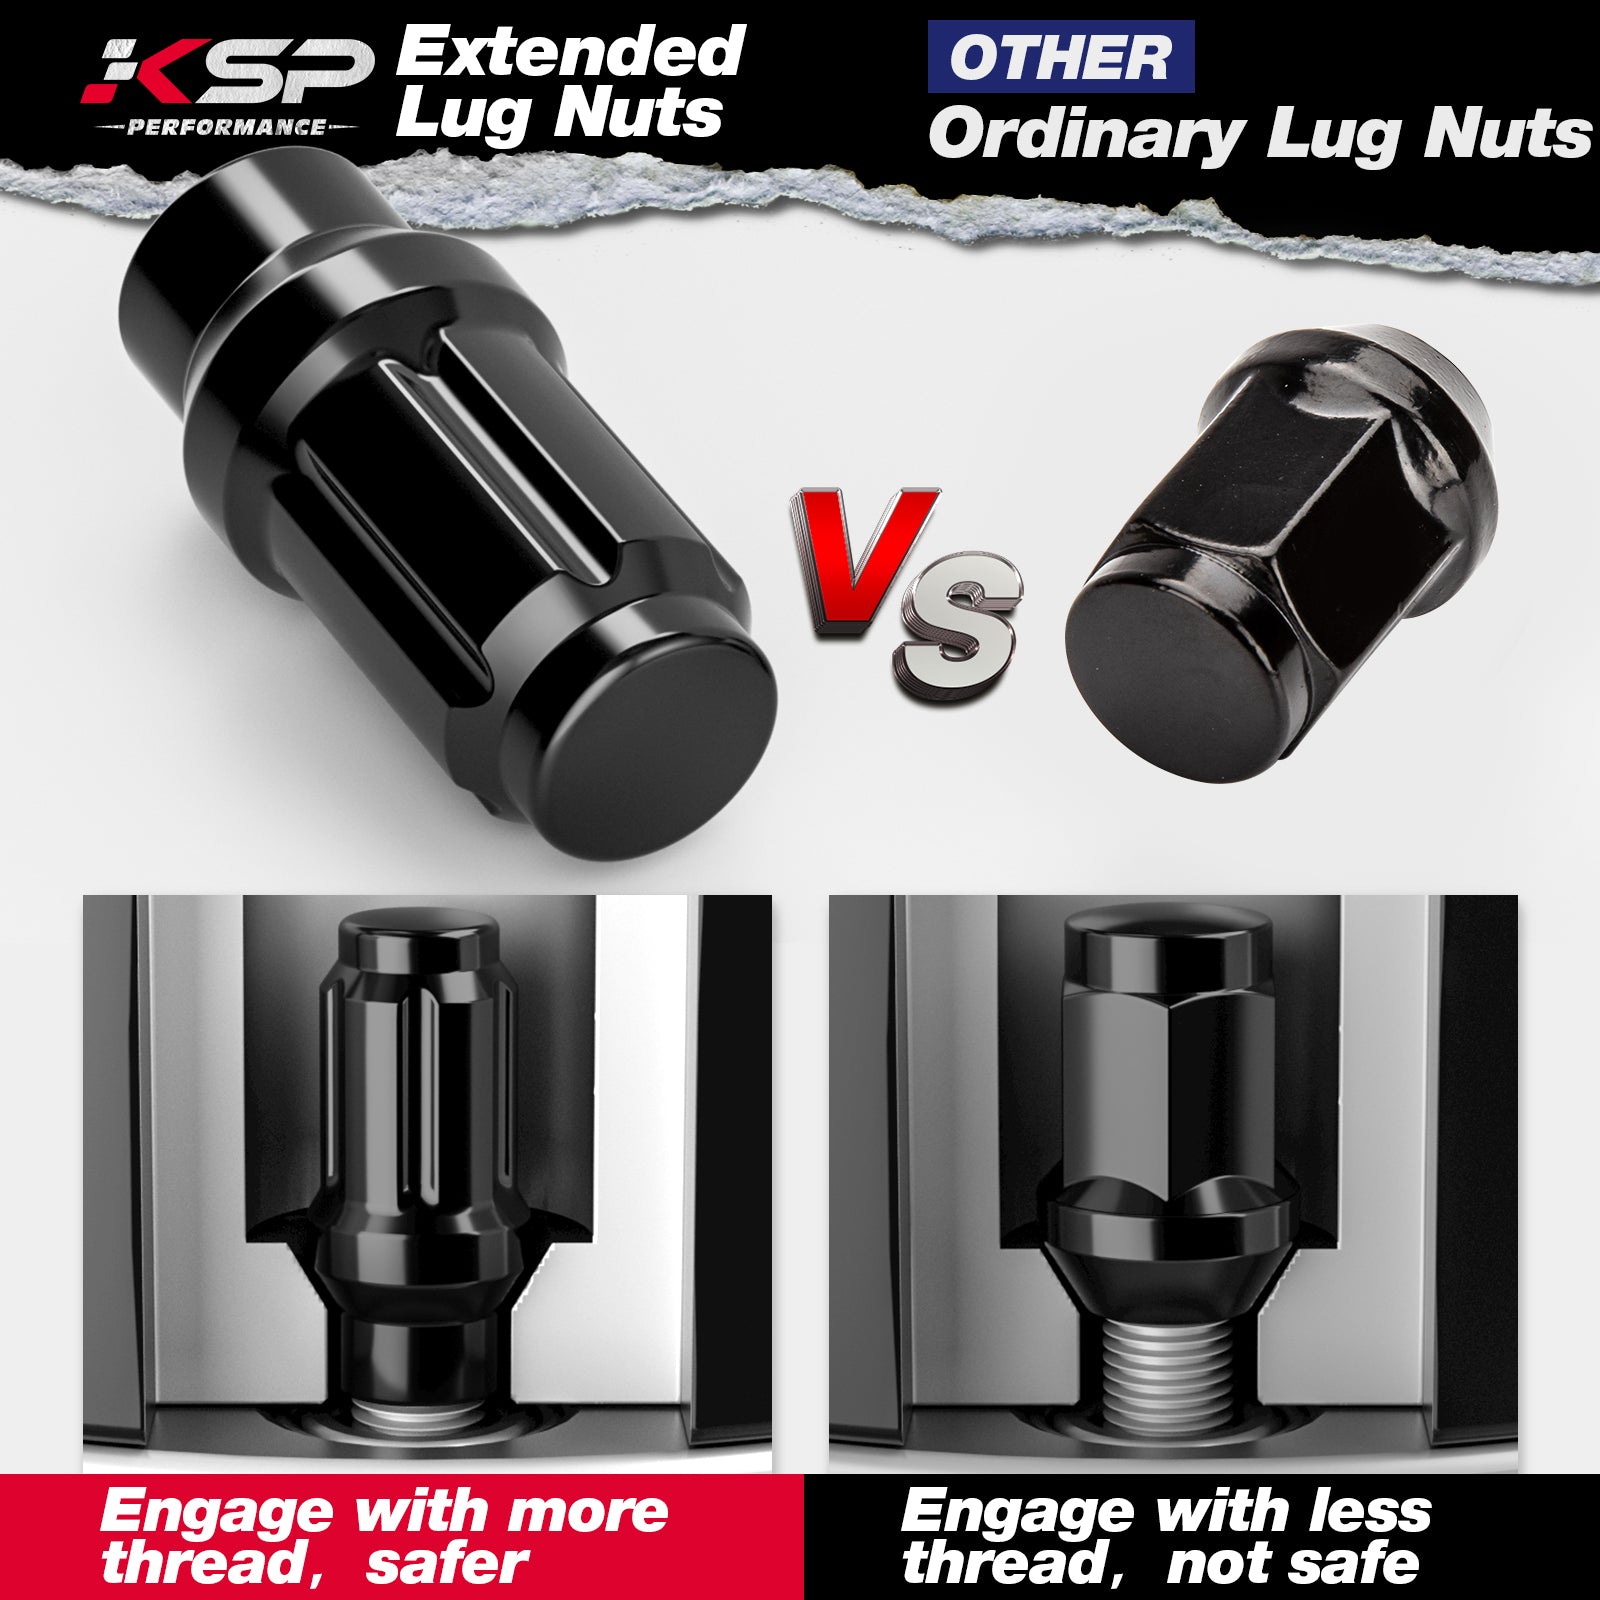 12x1.5 Extended Lug Nuts 24pcs+1keys Black 6 Spline closed end with 7.6mm shank-5